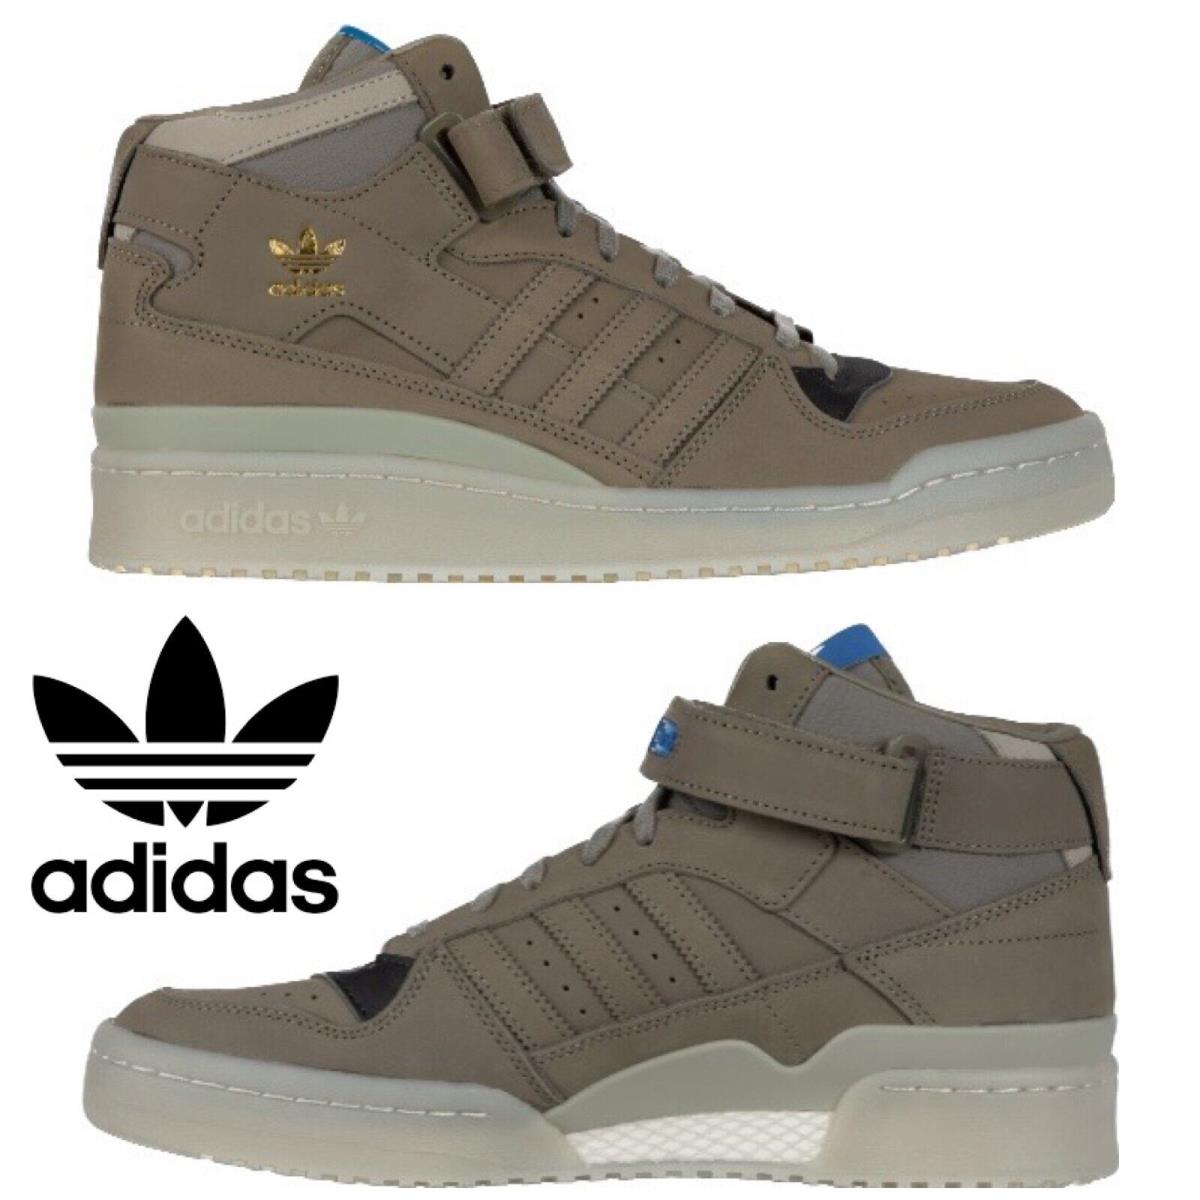 Adidas Originals Forum Mid Men`s Sneakers Comfort Sport Casual Shoes Grey - Gray, Manufacturer: Gray/Brown